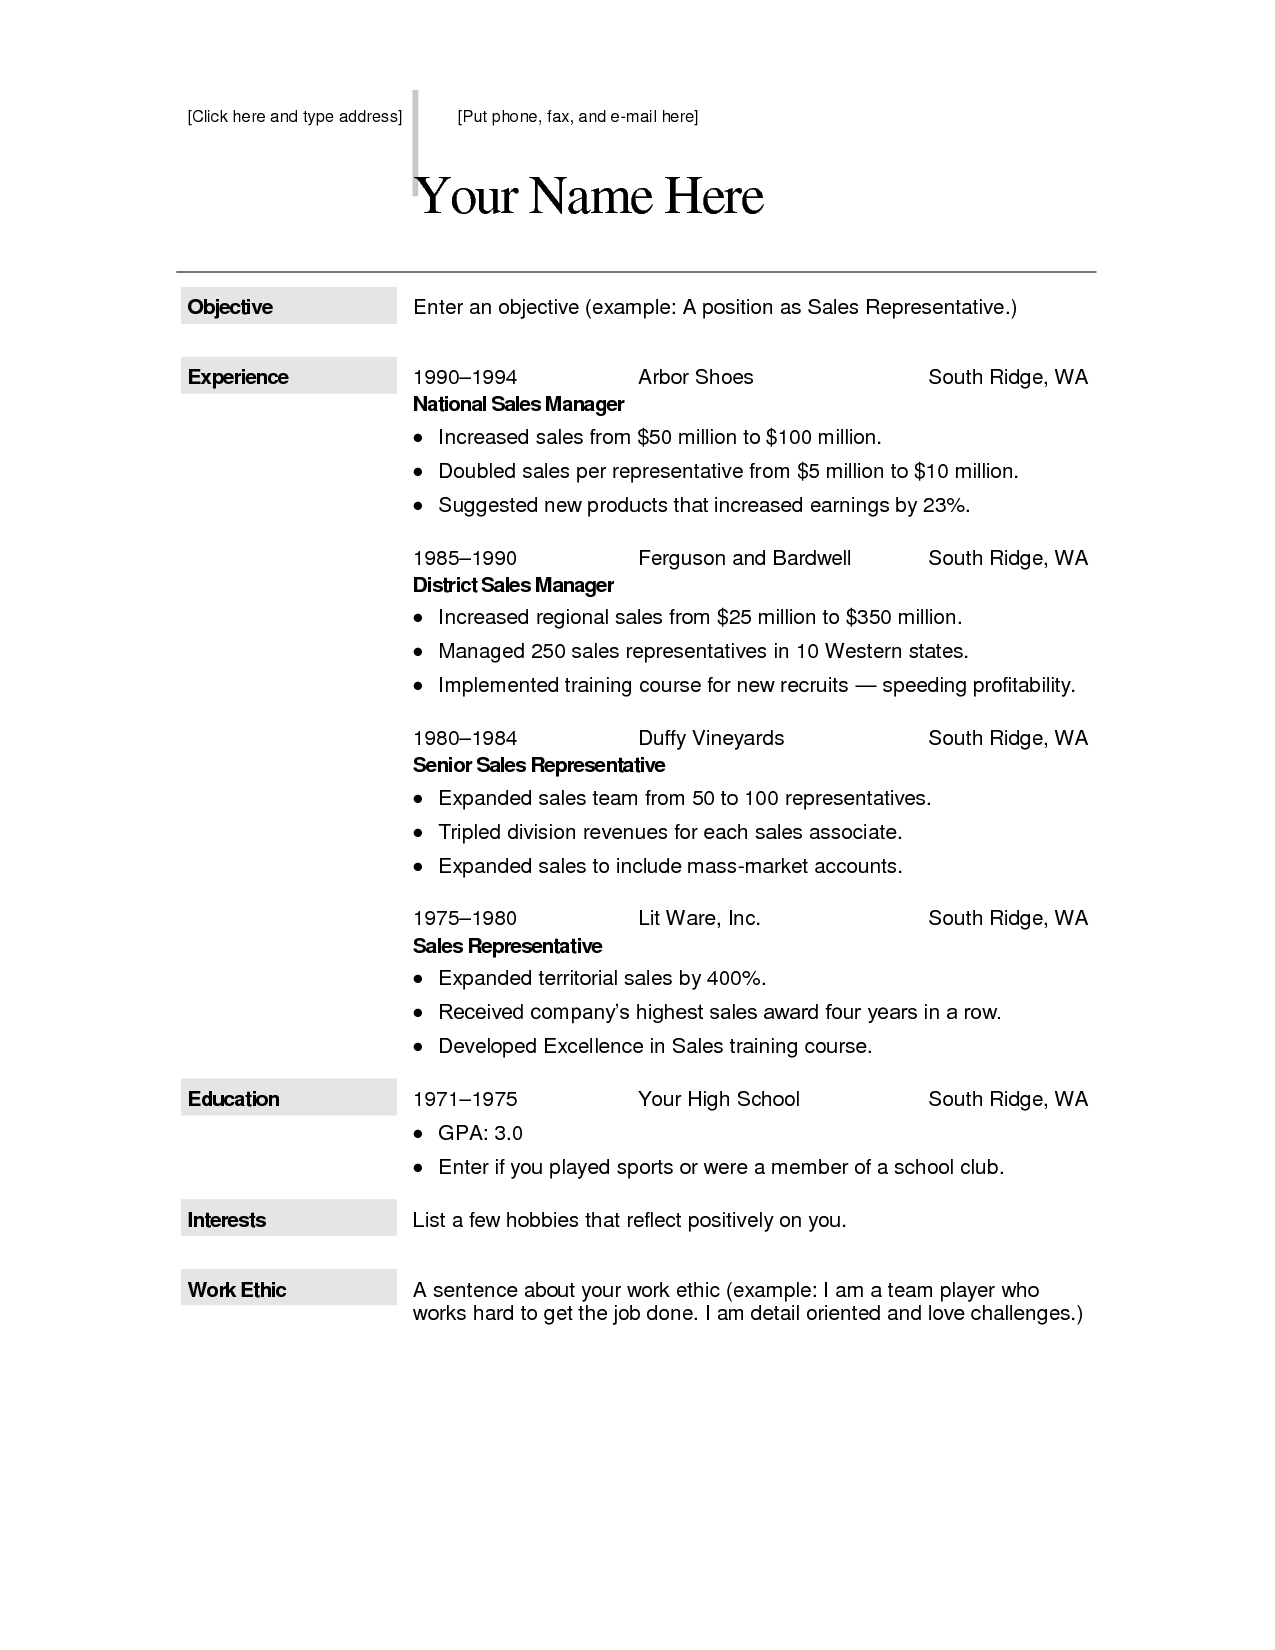 Do an online resume templit